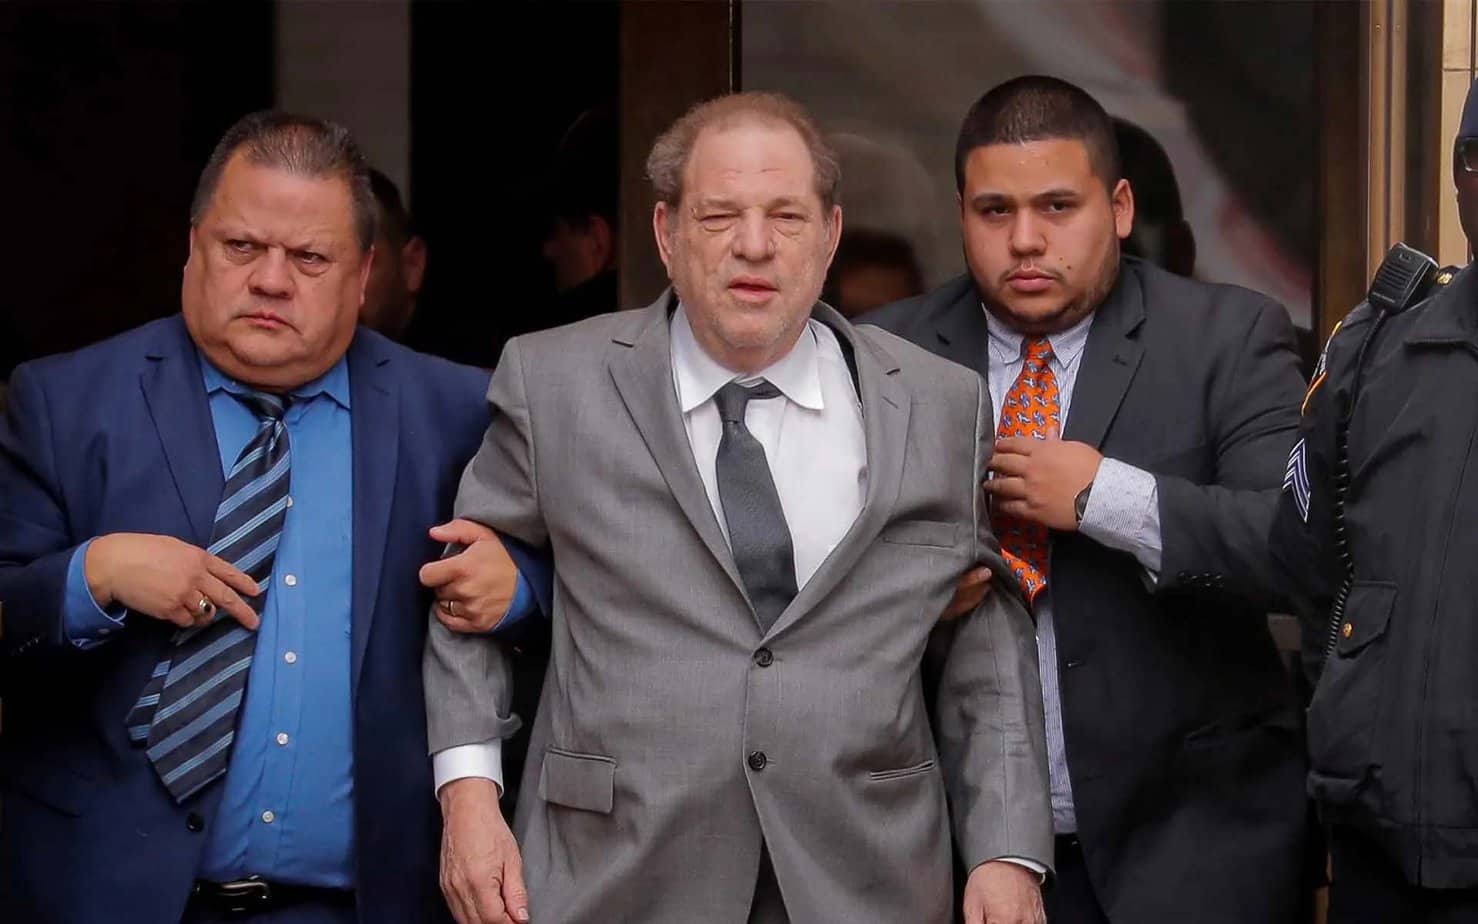 Harvey Weinstein Update - Does the Convicted Offender Have Coronavirus?